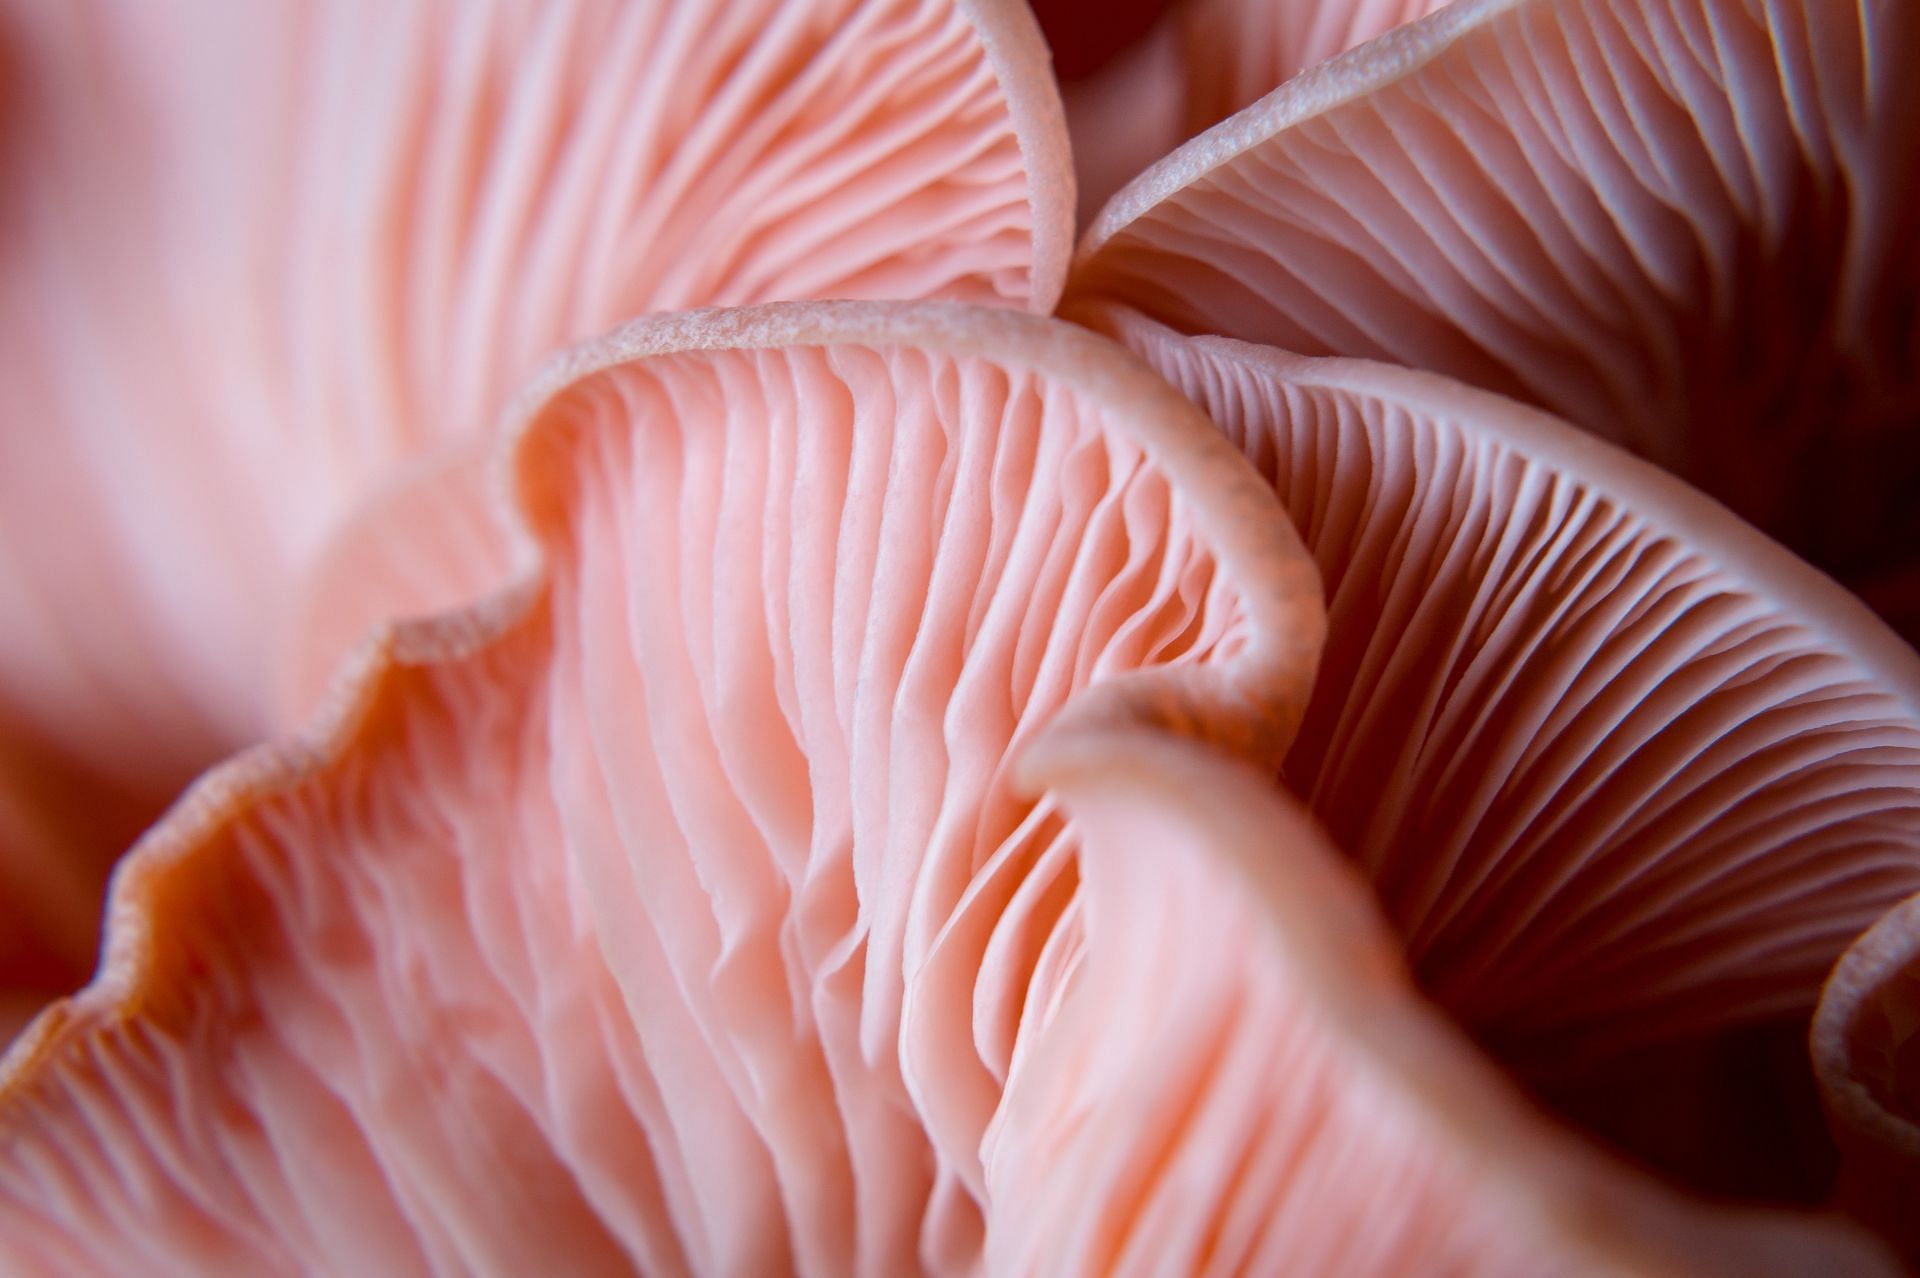 King oyster mushrooms are a great option for vegans. (Image via Unsplash / Juan Martin Lopez)